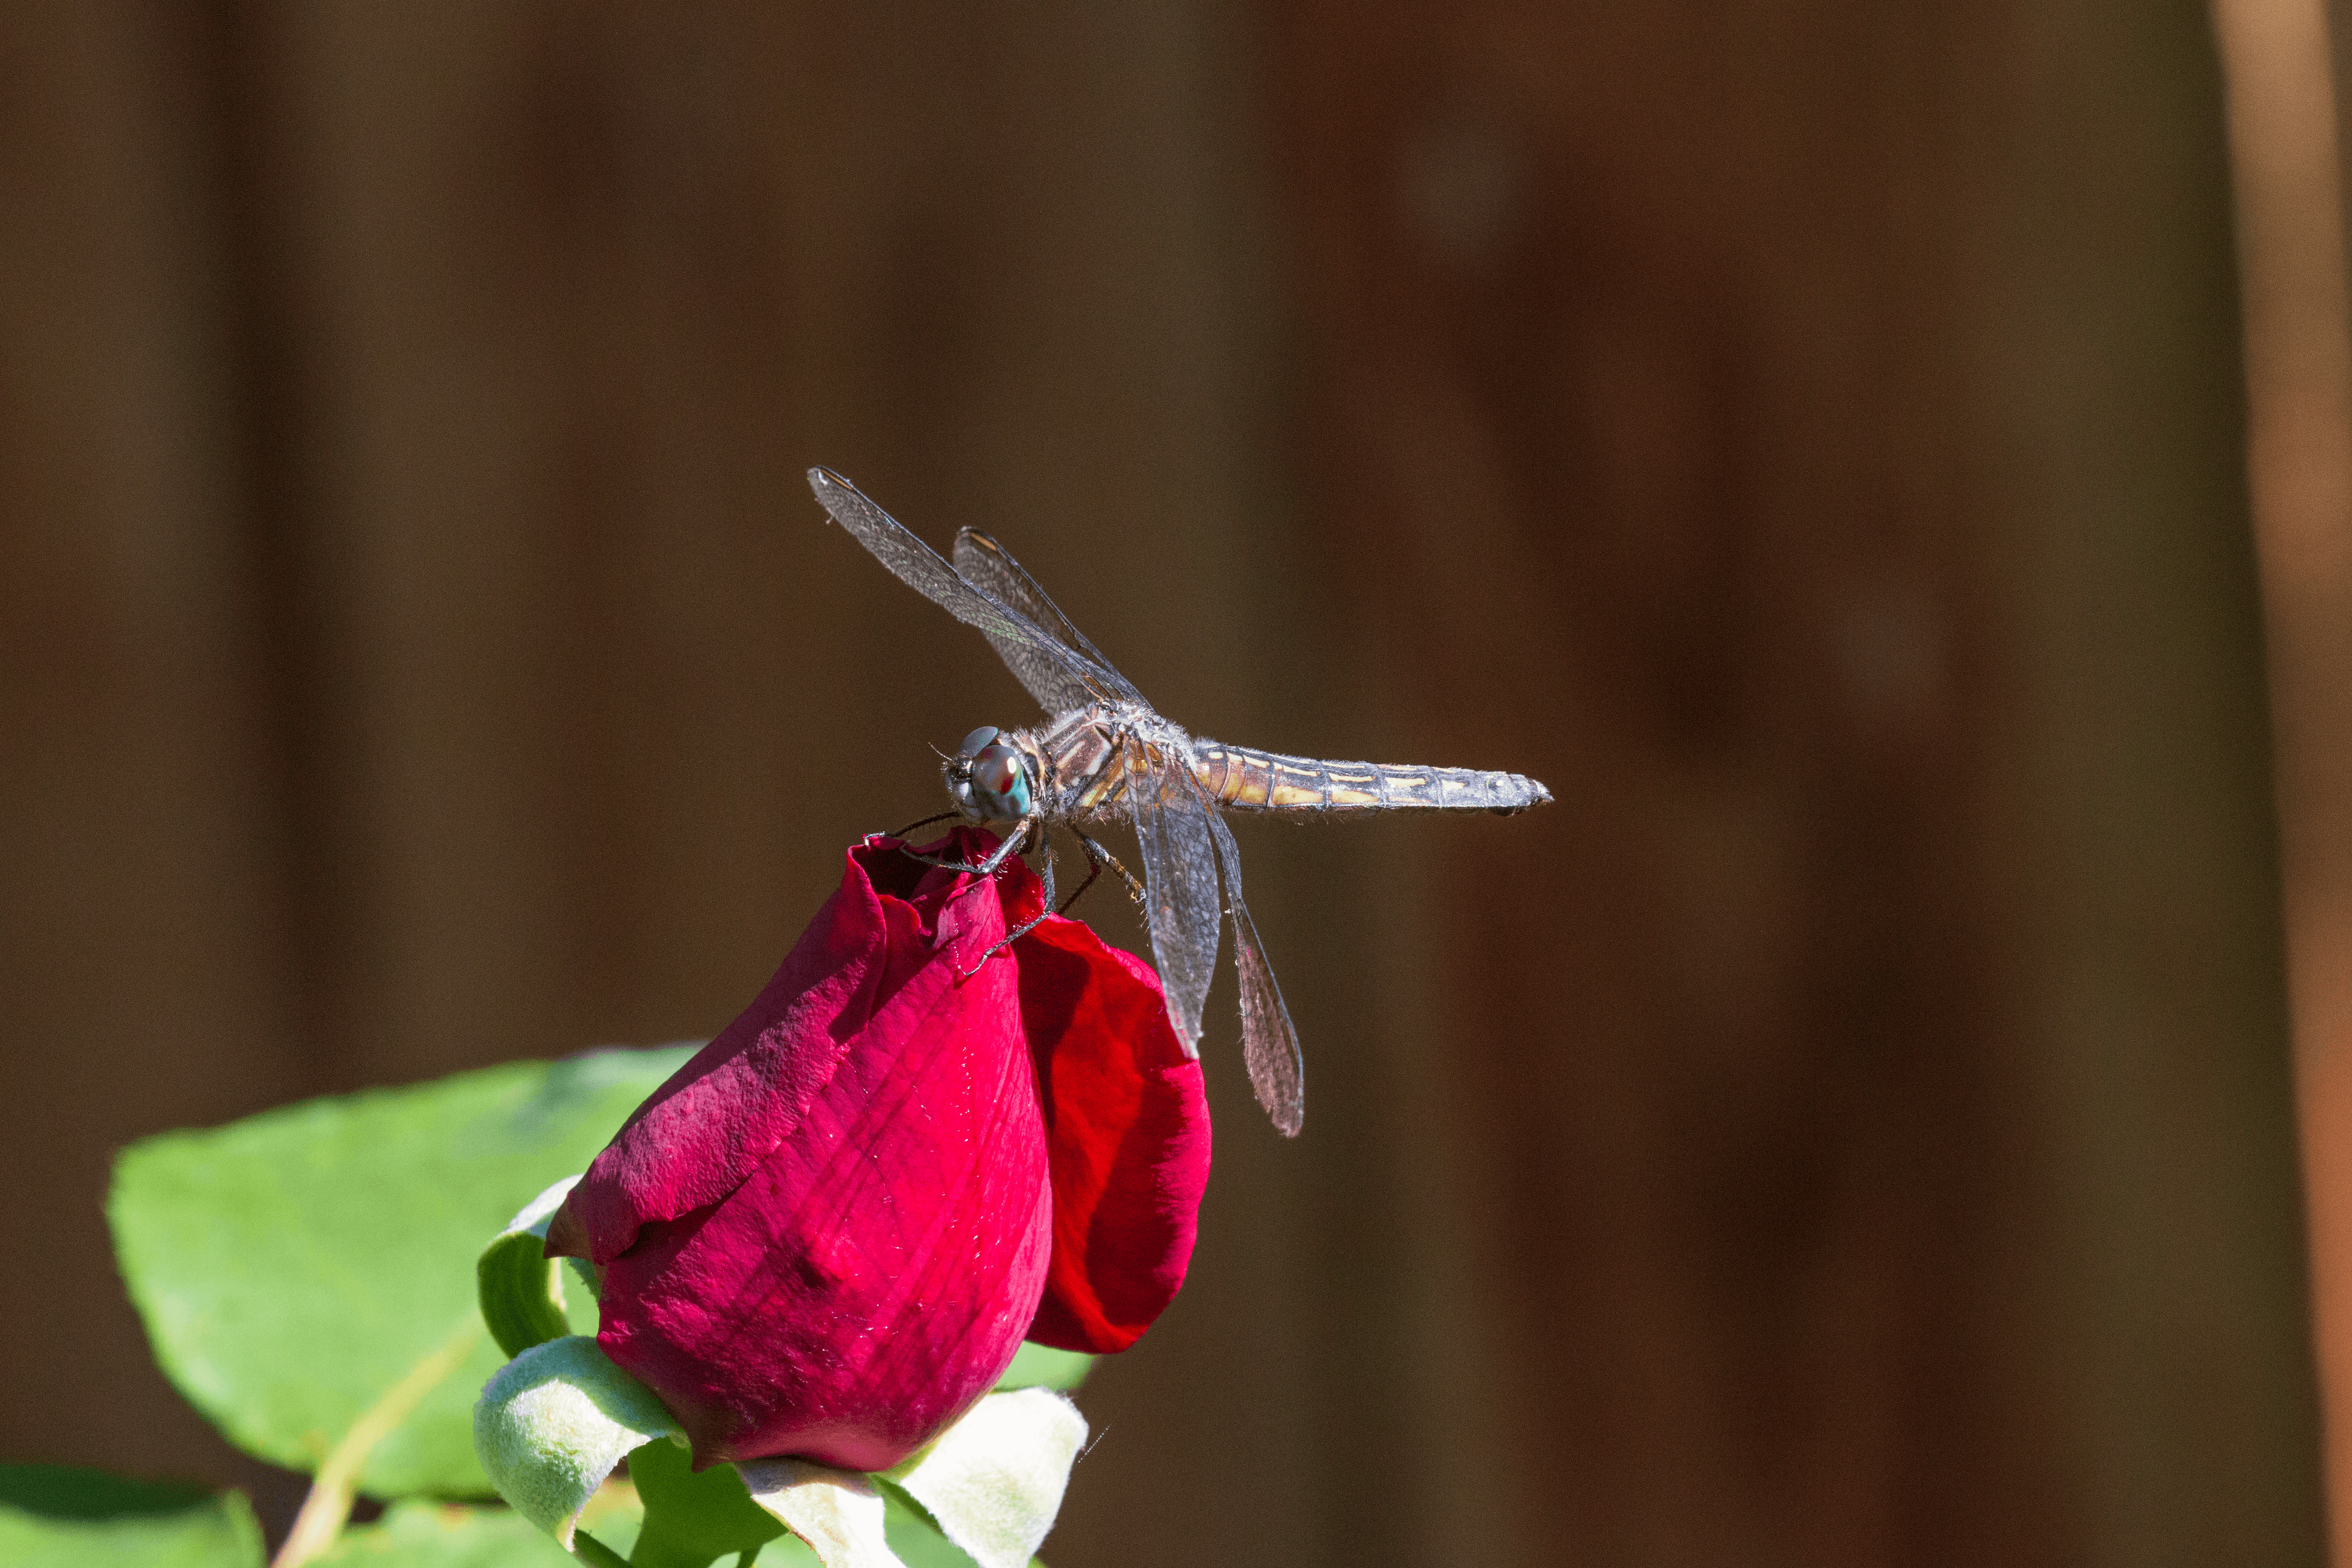 Dragonfly Rose